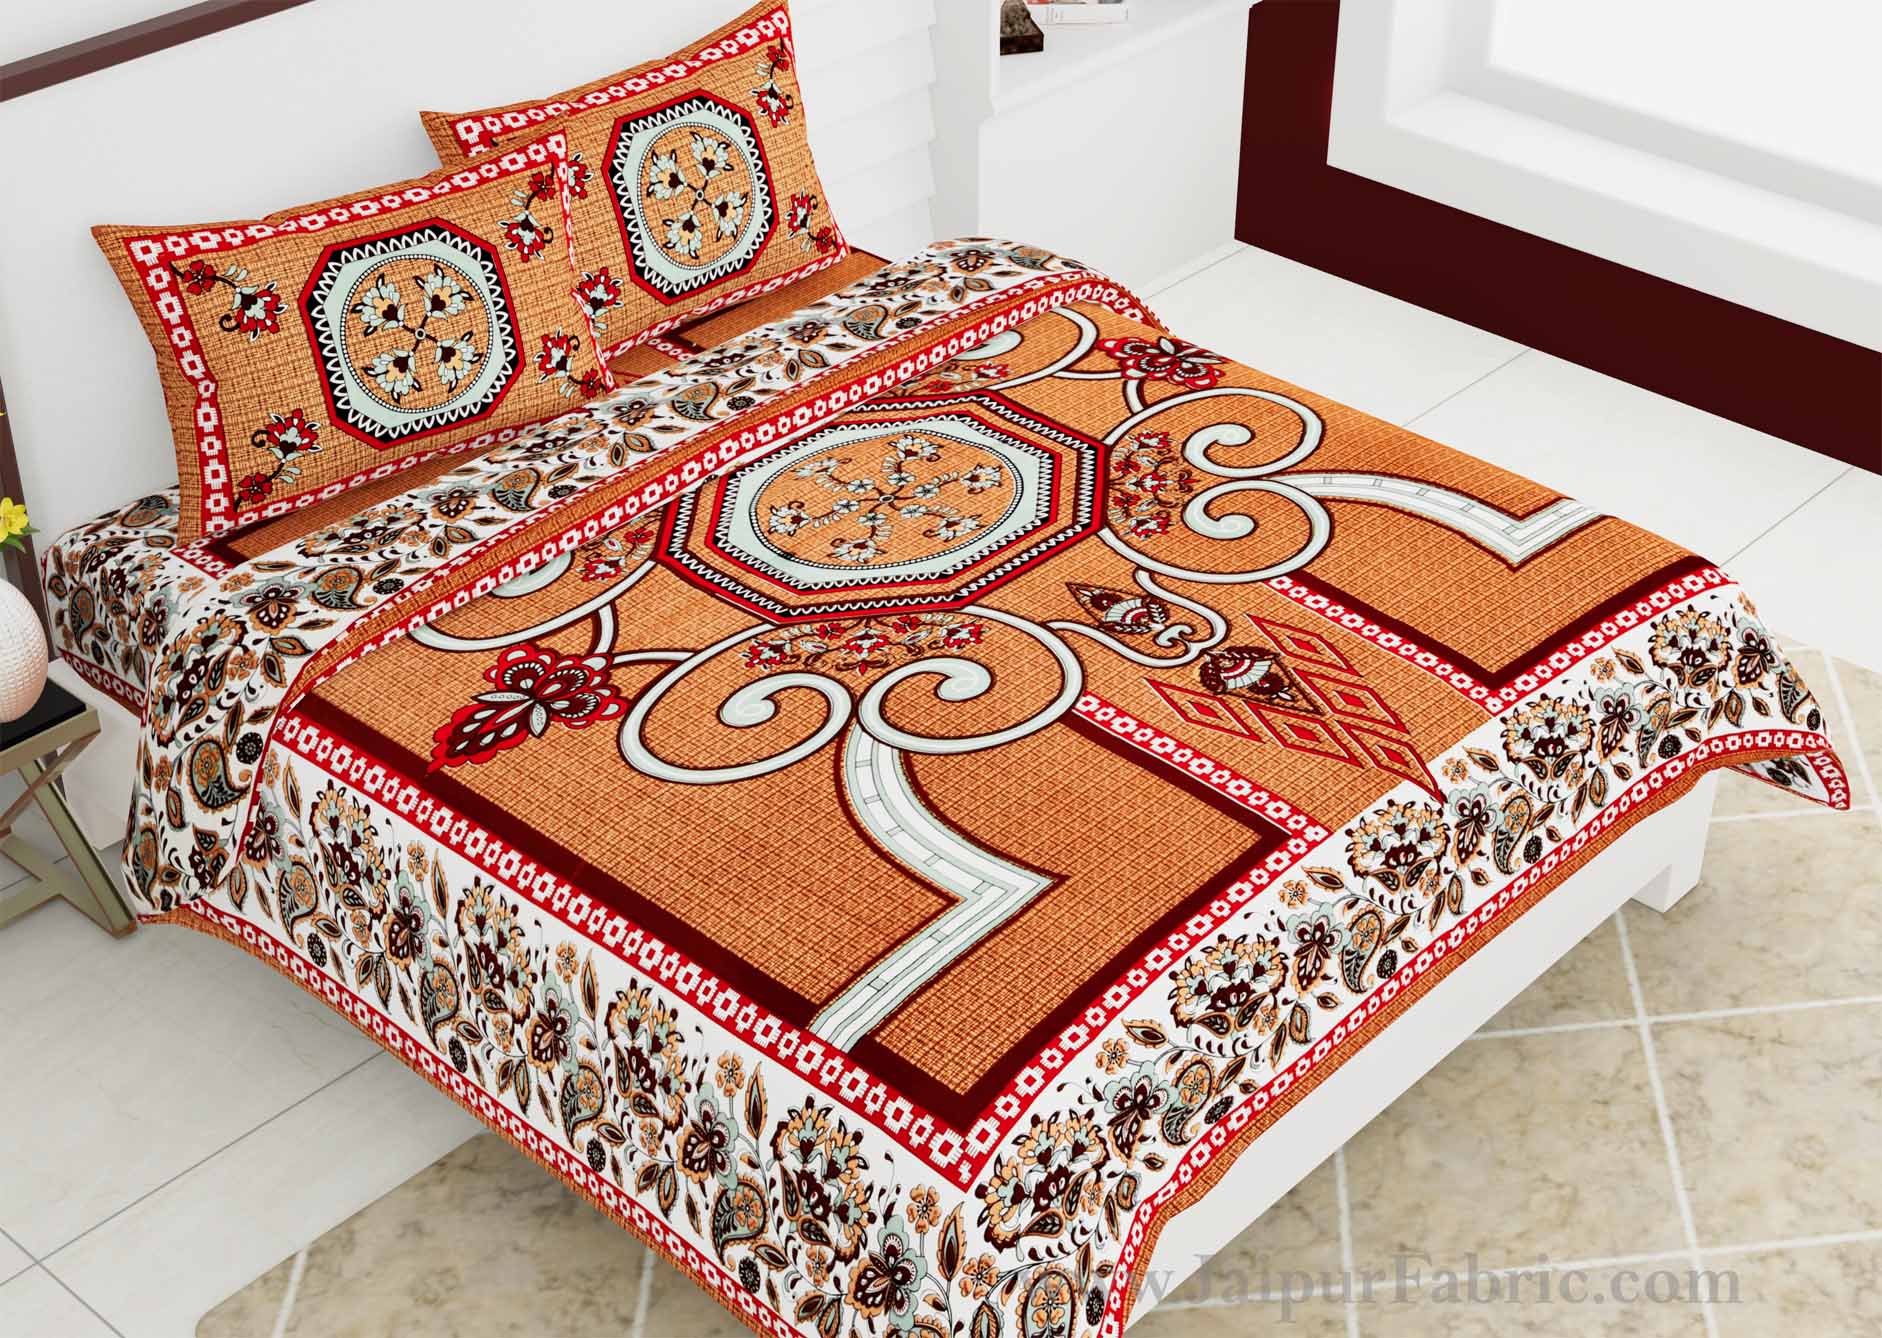 Double Bedsheet Orangish Rangoli Cotton 2 Pillow Cover